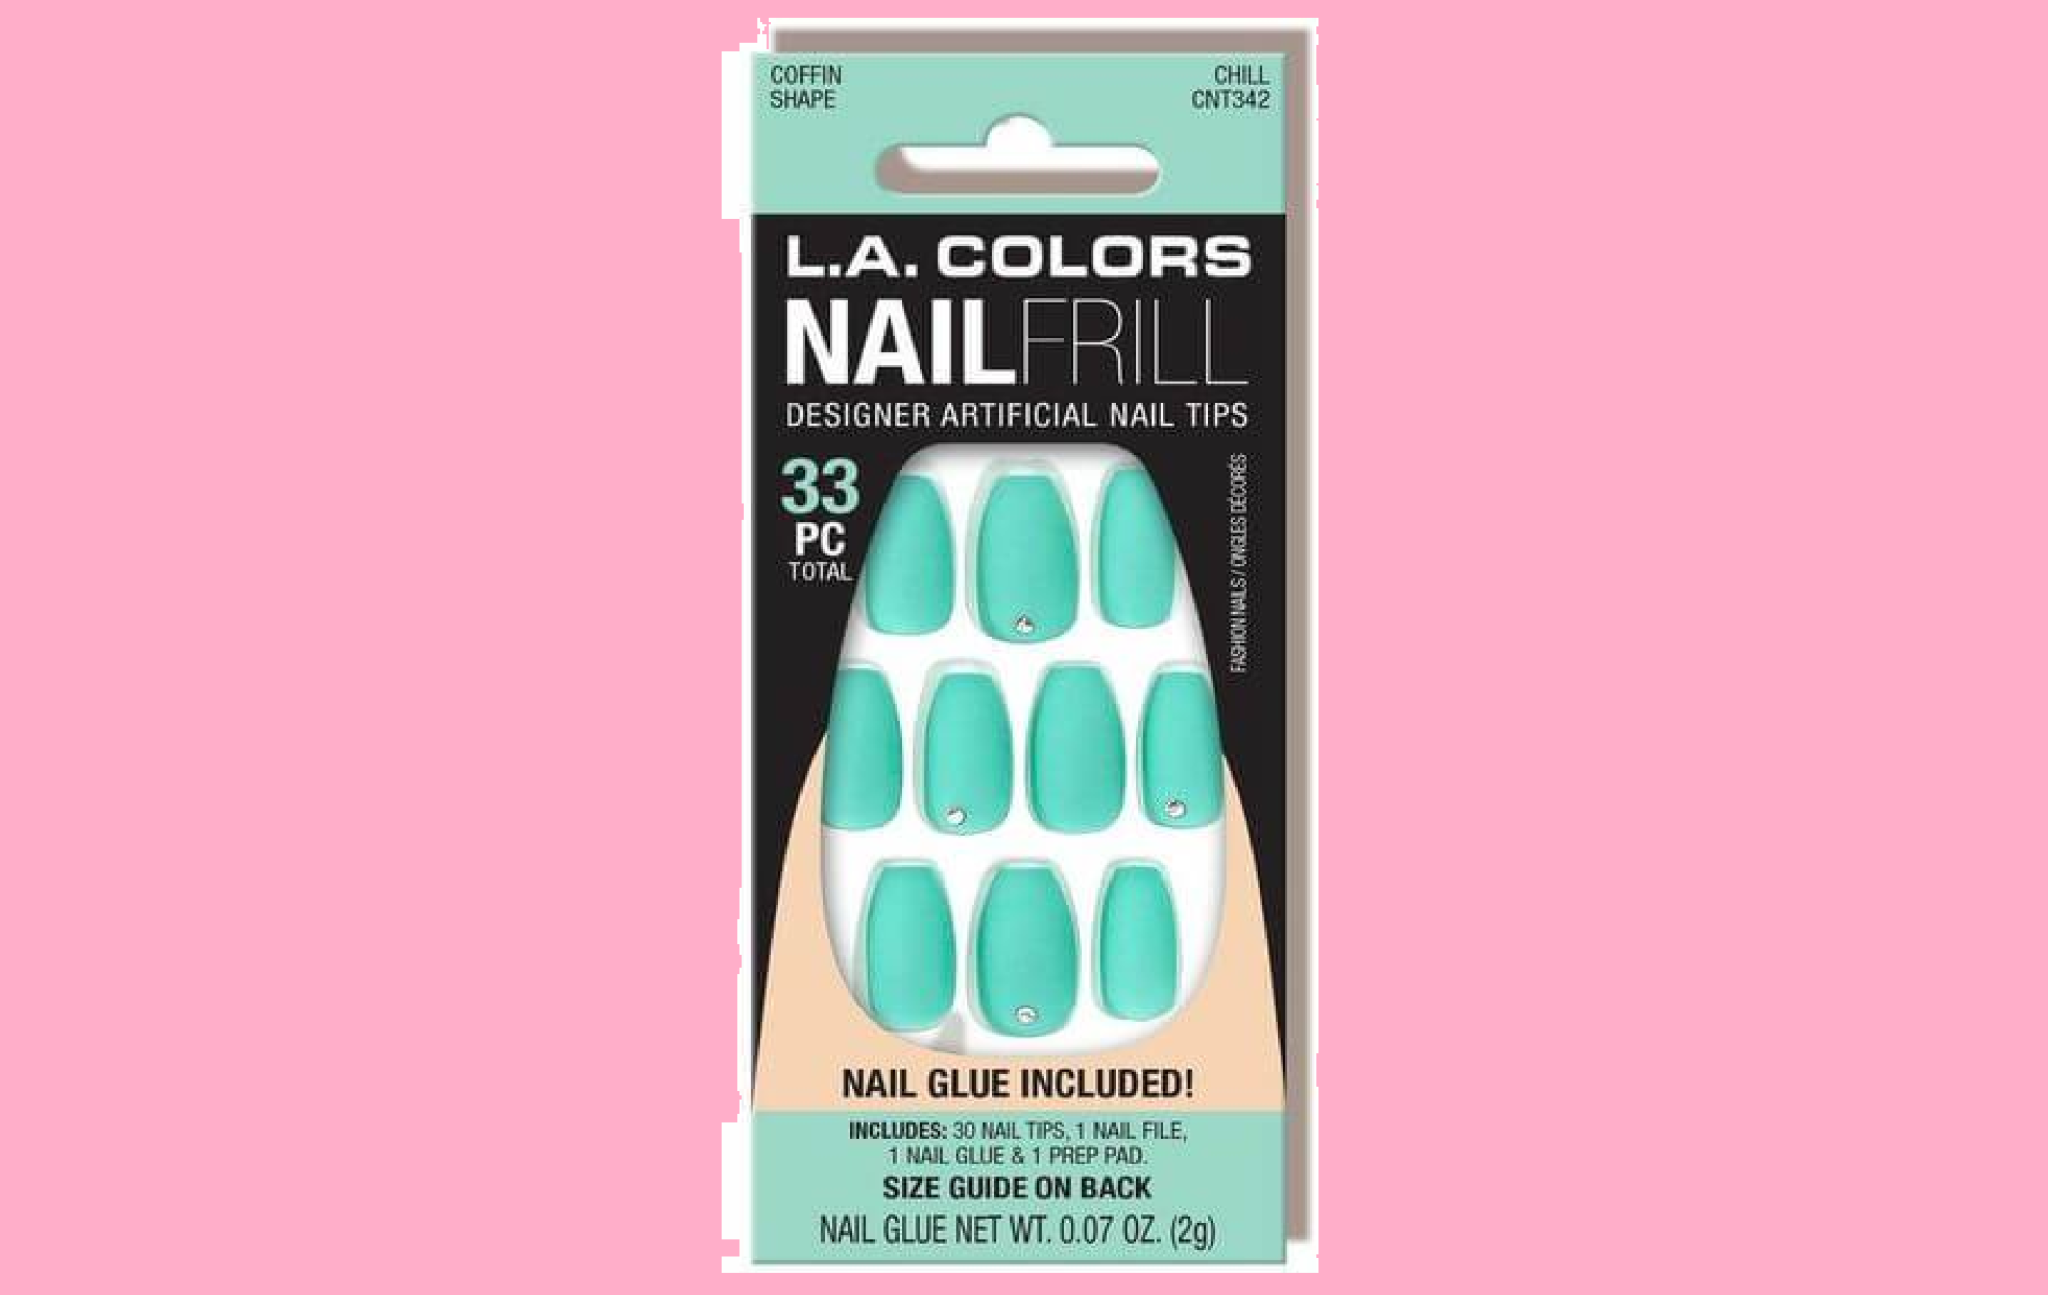 L.A. Colors Nail Frill - wide 7